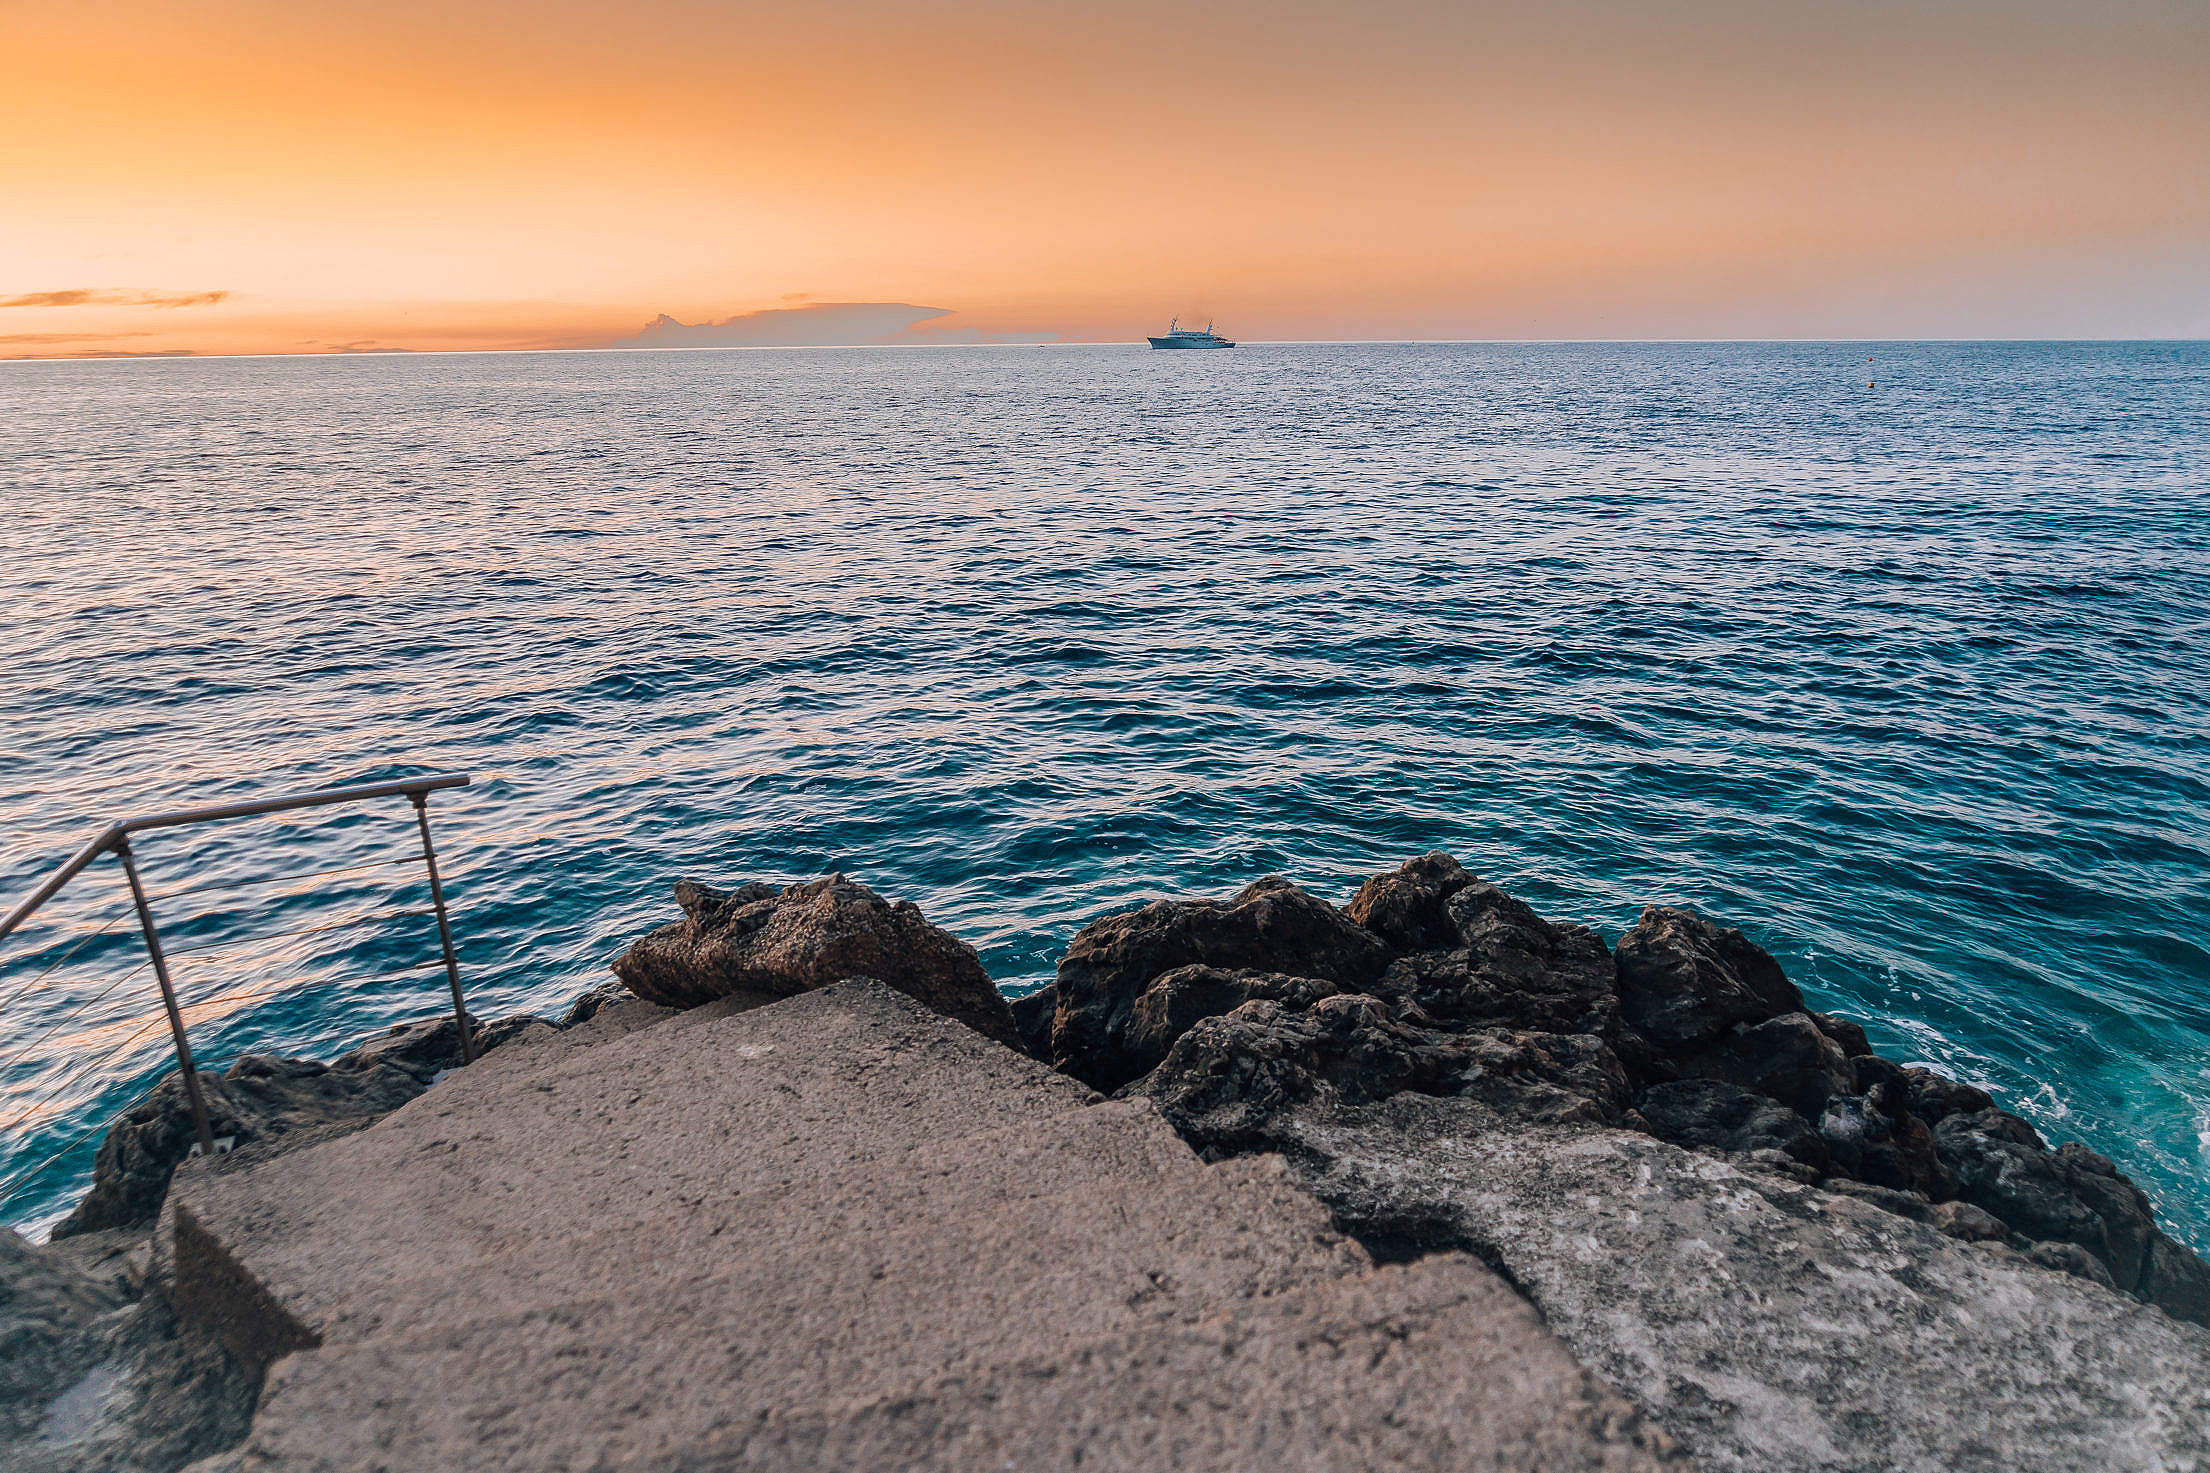 Morning Sea Horizon with a Boat Free Stock Photo